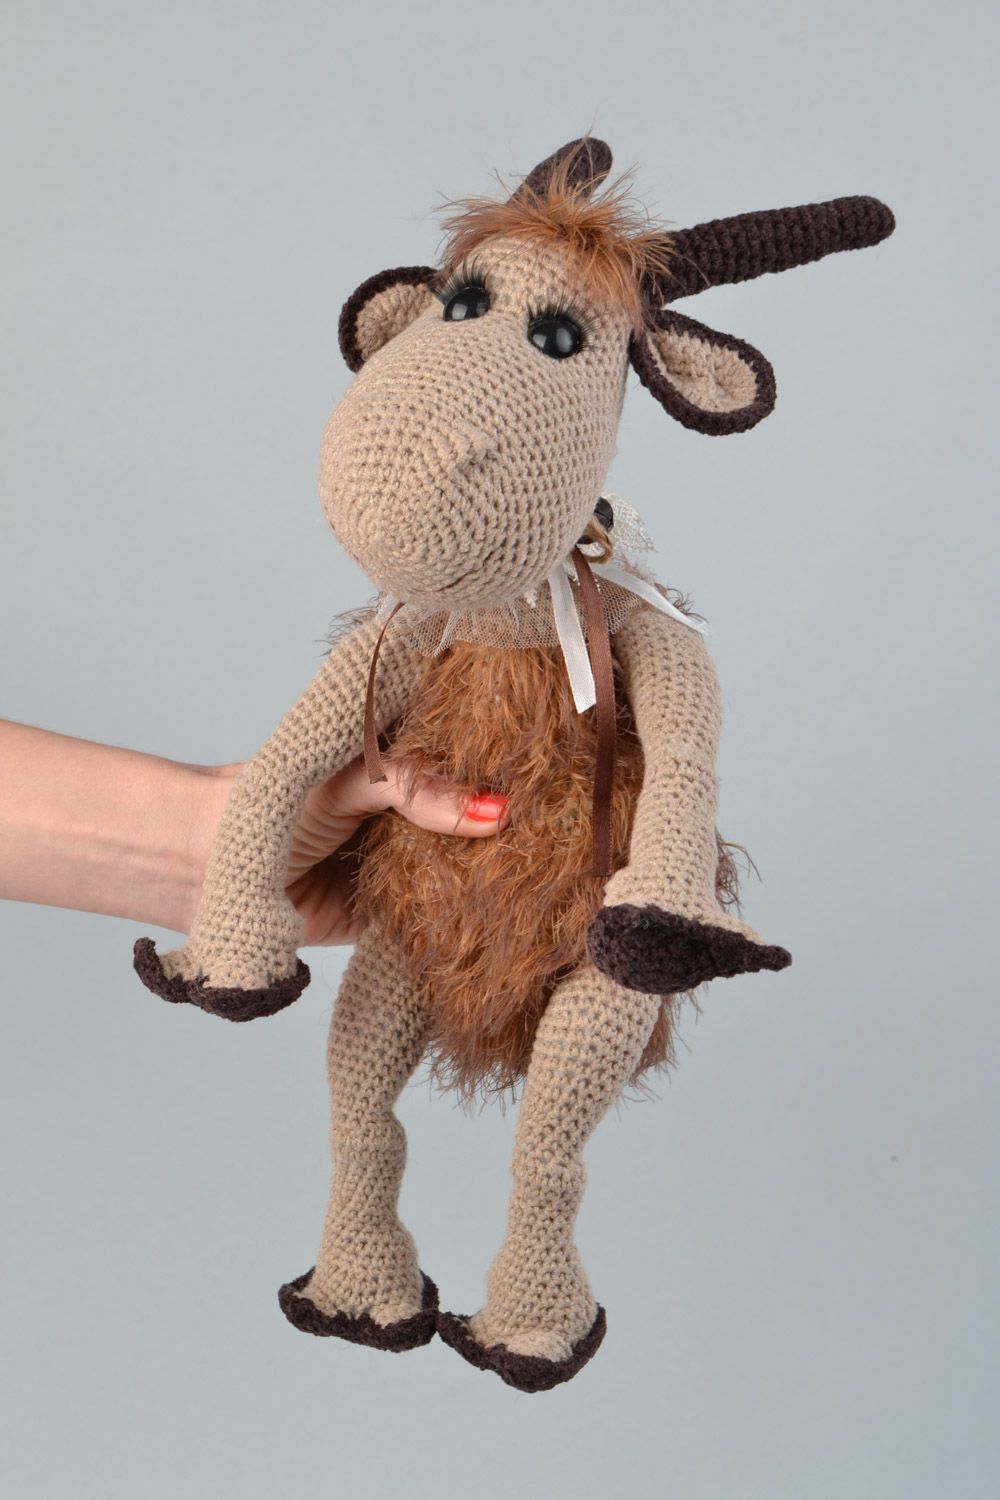 Handmade soft crochet toy nanny goat for children and home decor photo 2